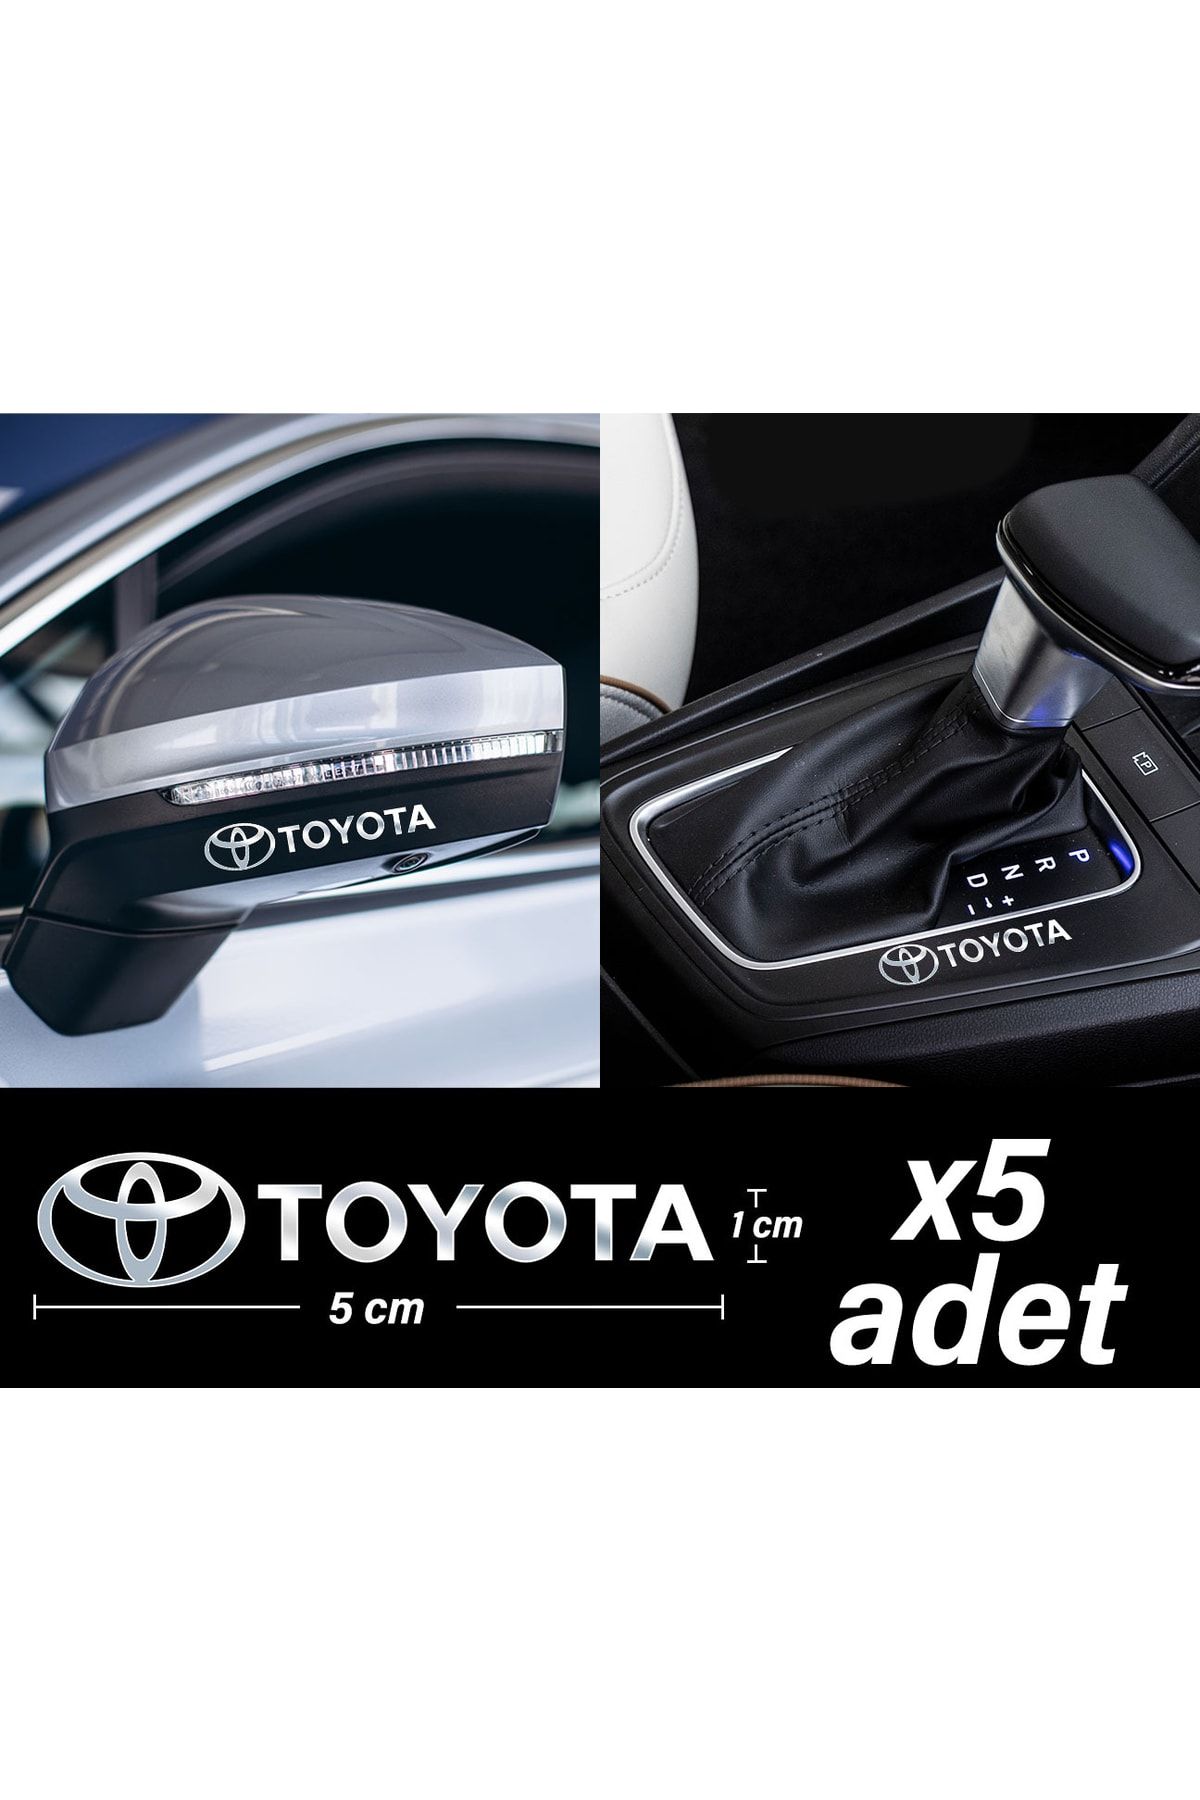 ÖZKAŞ Toyota Için Metal Sticker 5 Adet Oto Aksesuar Oto Sticker Çıkartma Araba